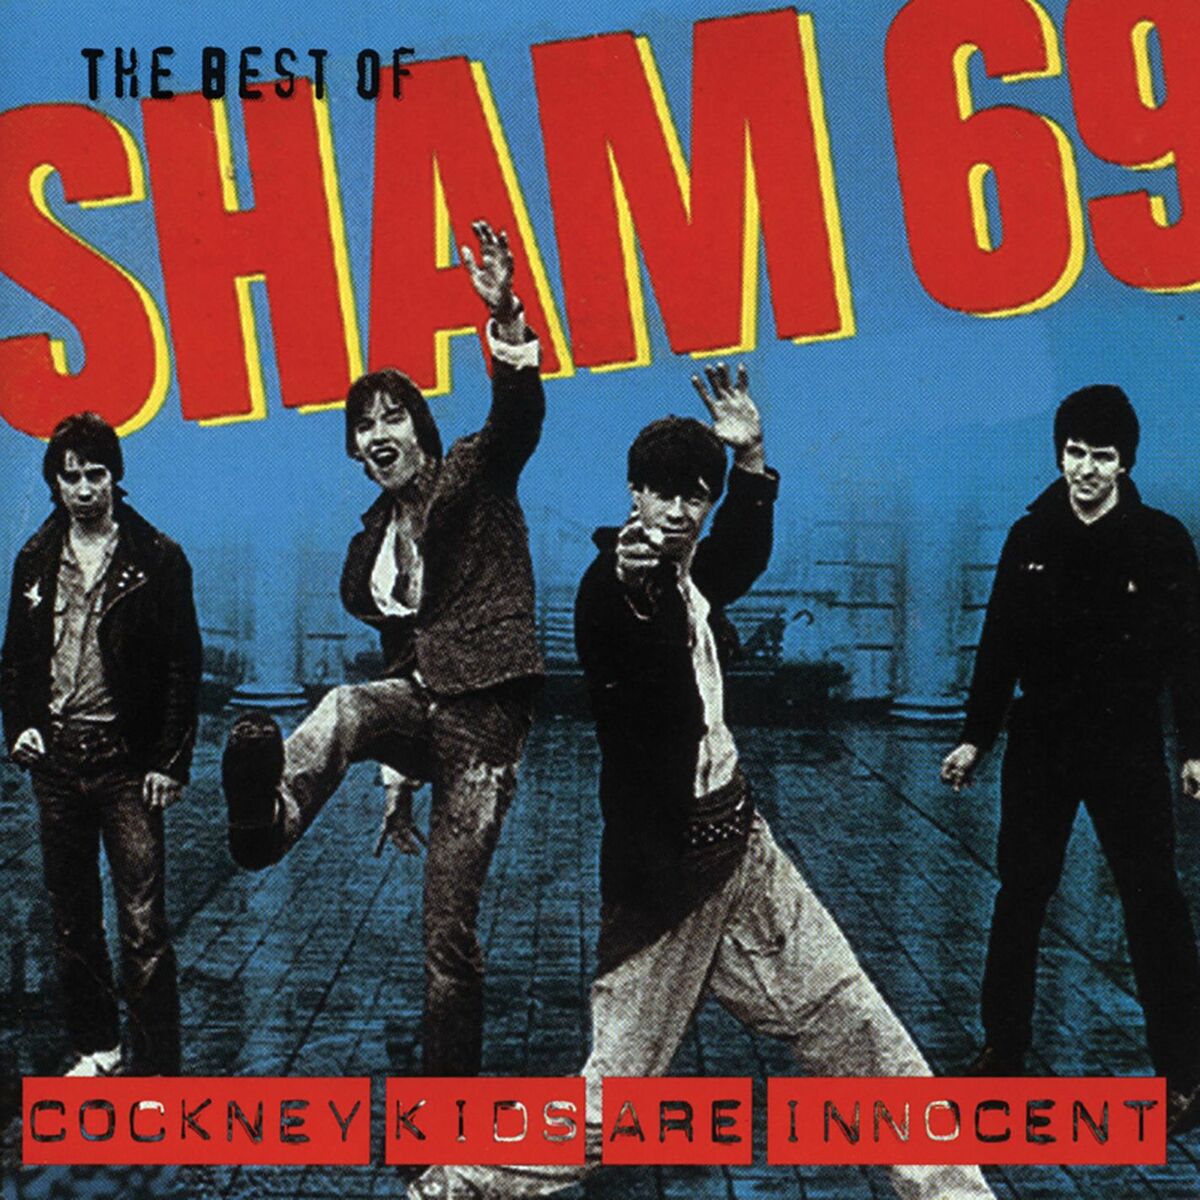 Sham 69: albums, songs, playlists | Listen on Deezer